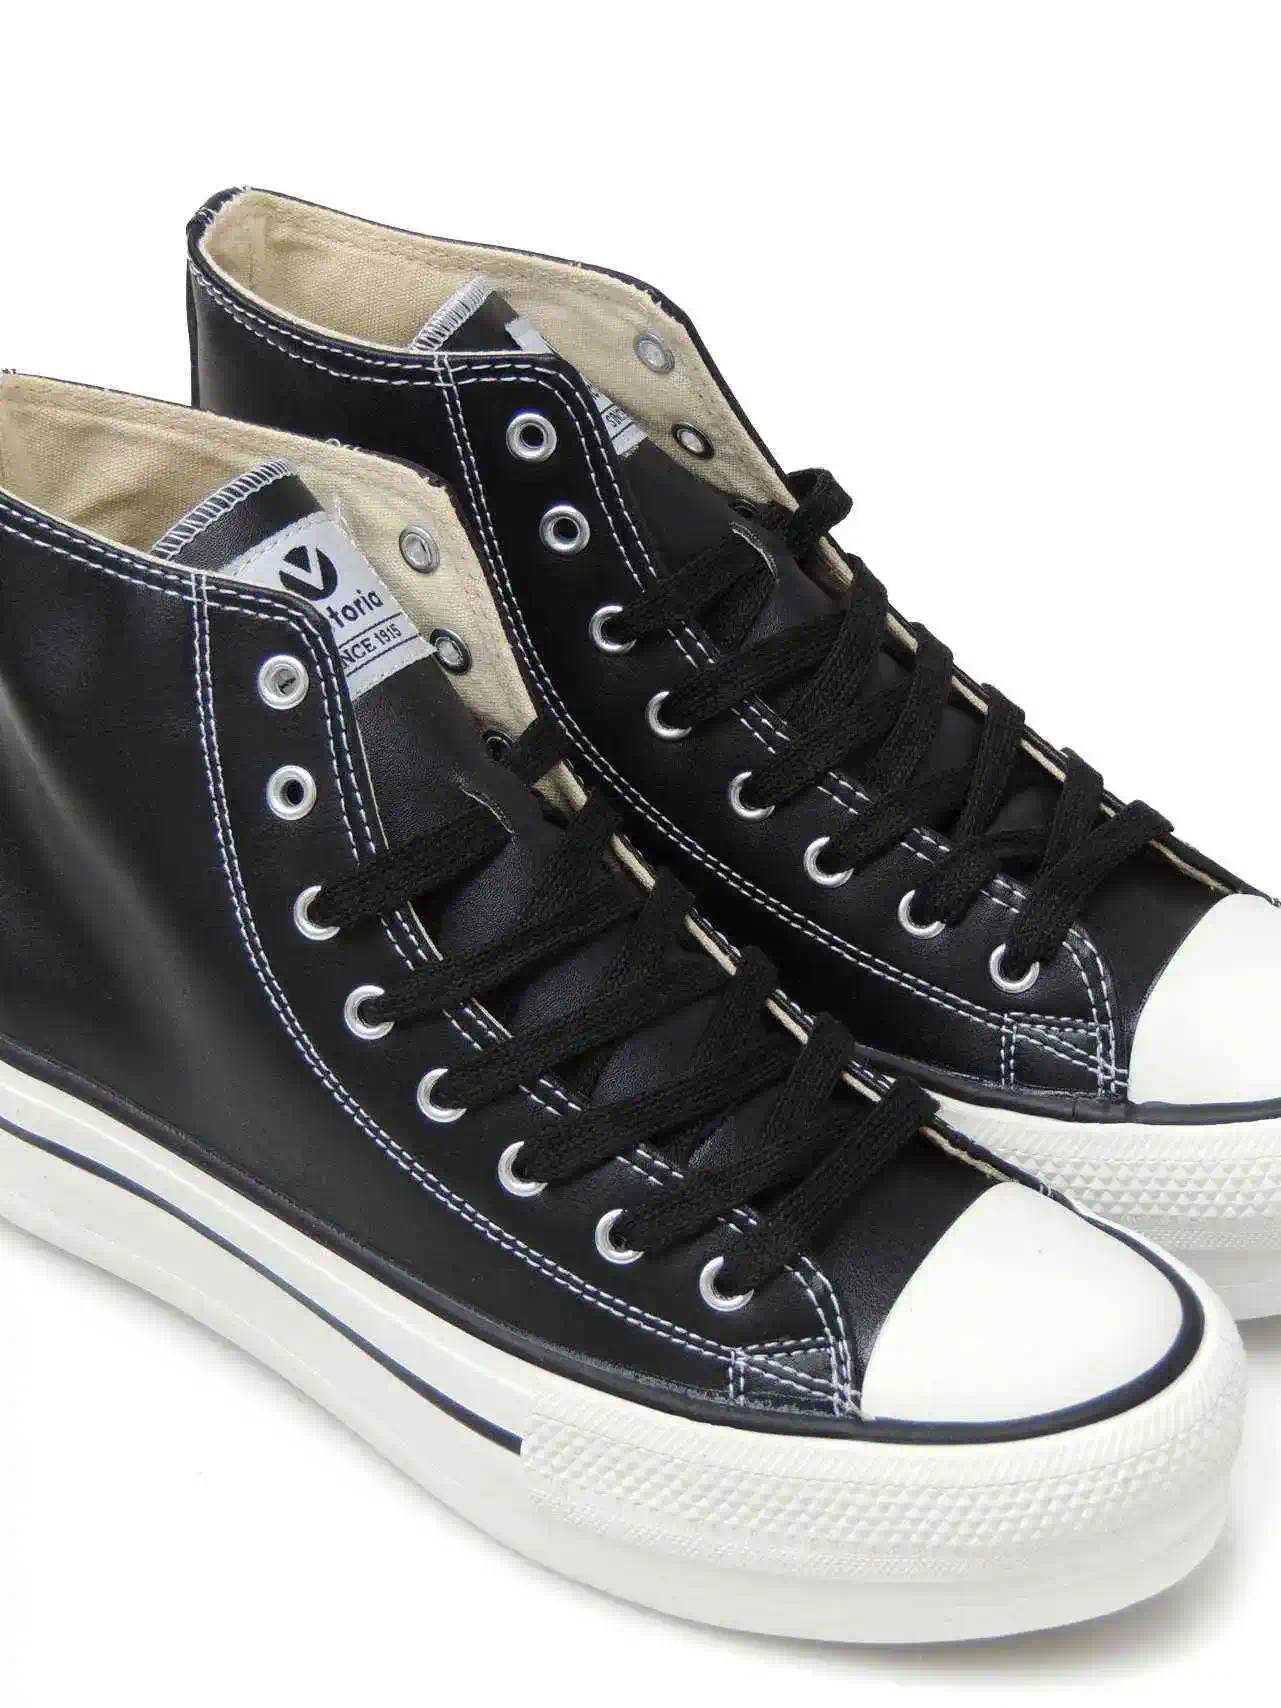 sneakers--victoria-1061107-polipiel-negro